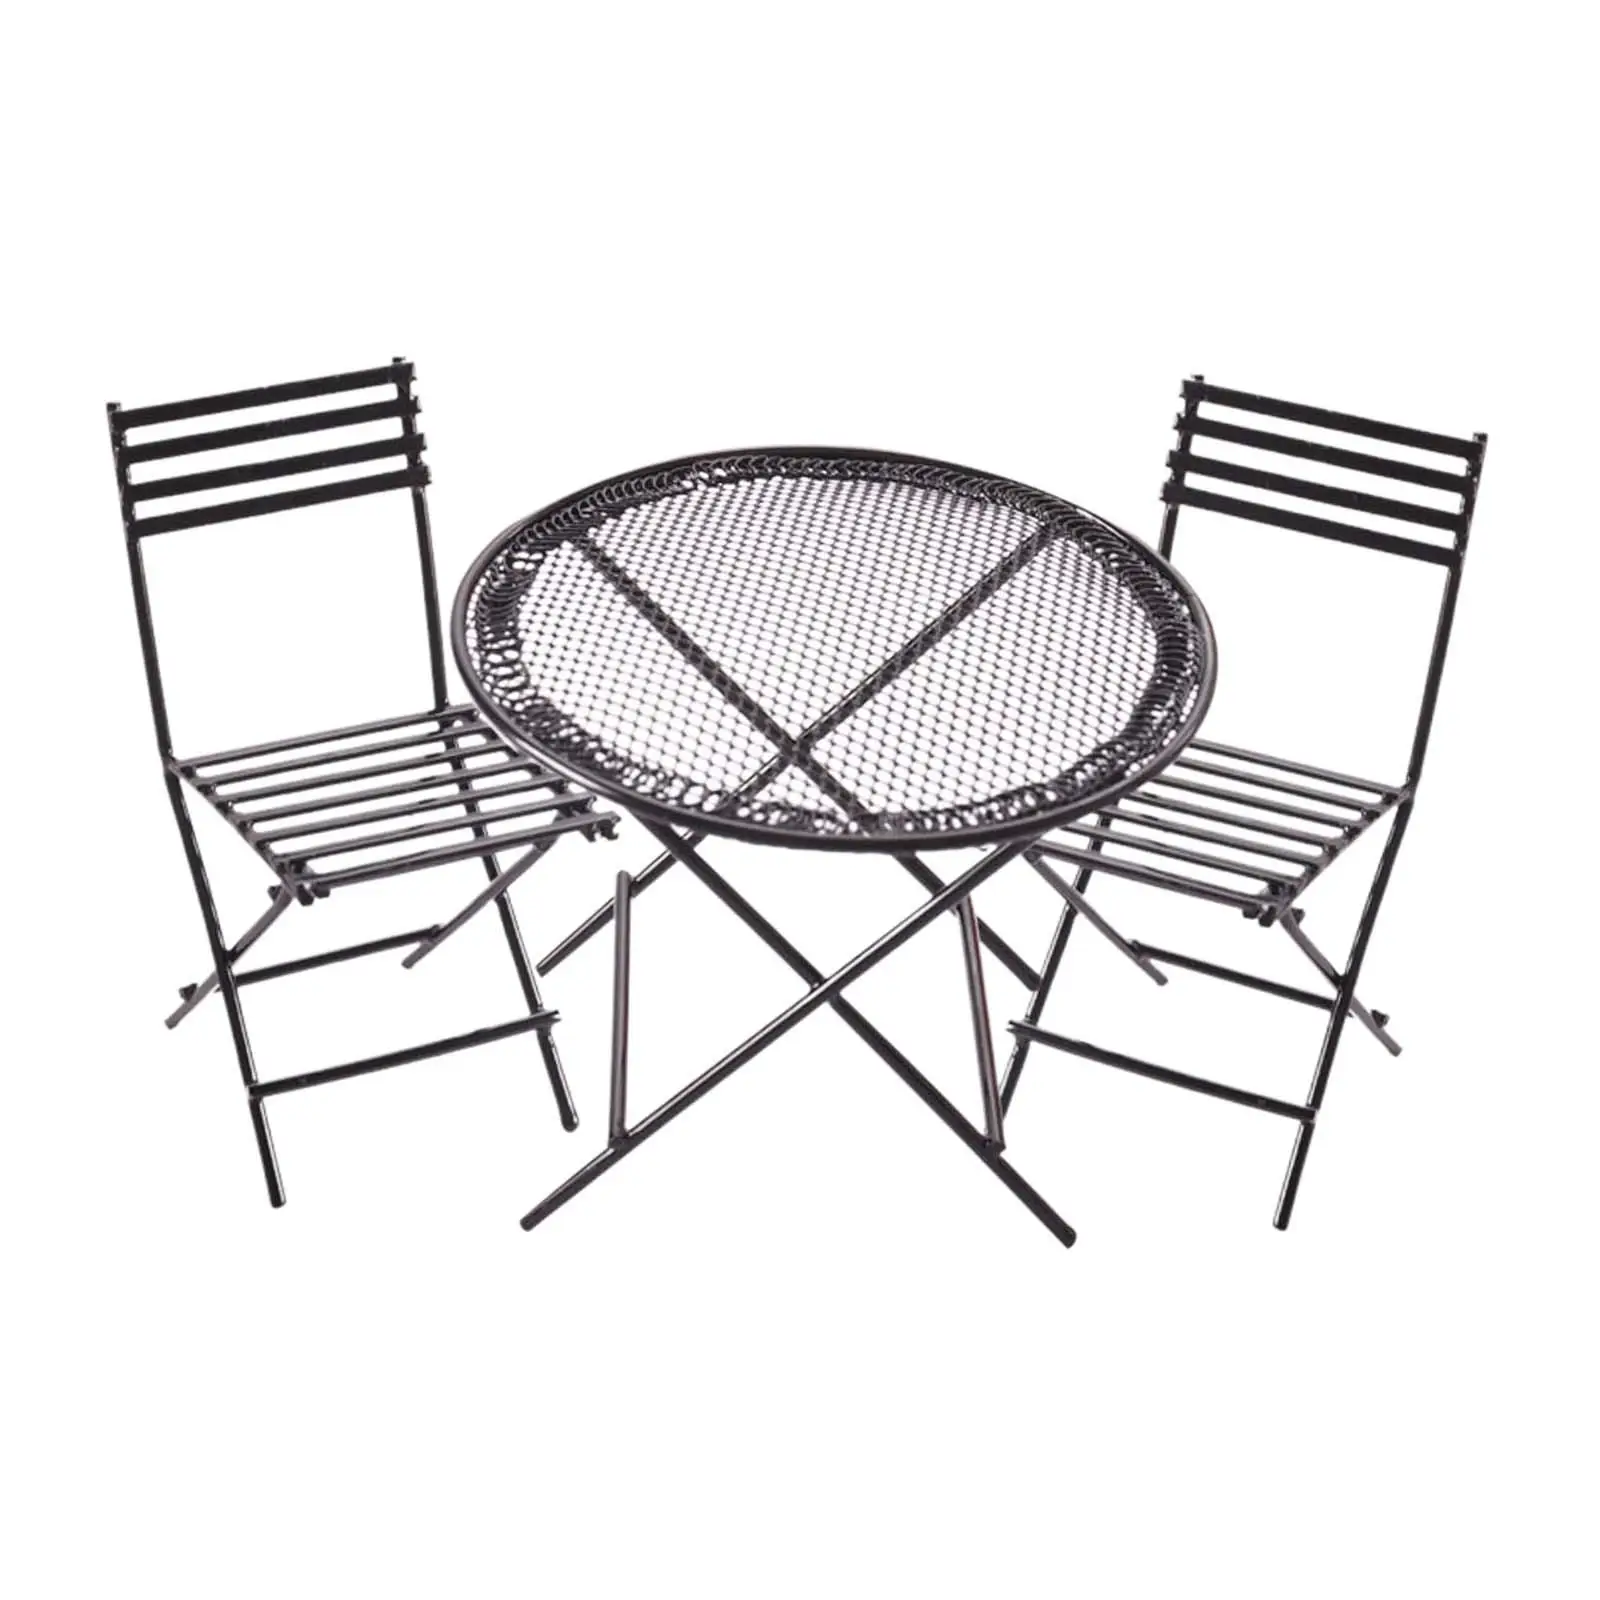 Dollhouse Miniature Table & Chairs Set Metal 1:12 Scale Coffee/Tea Furniture